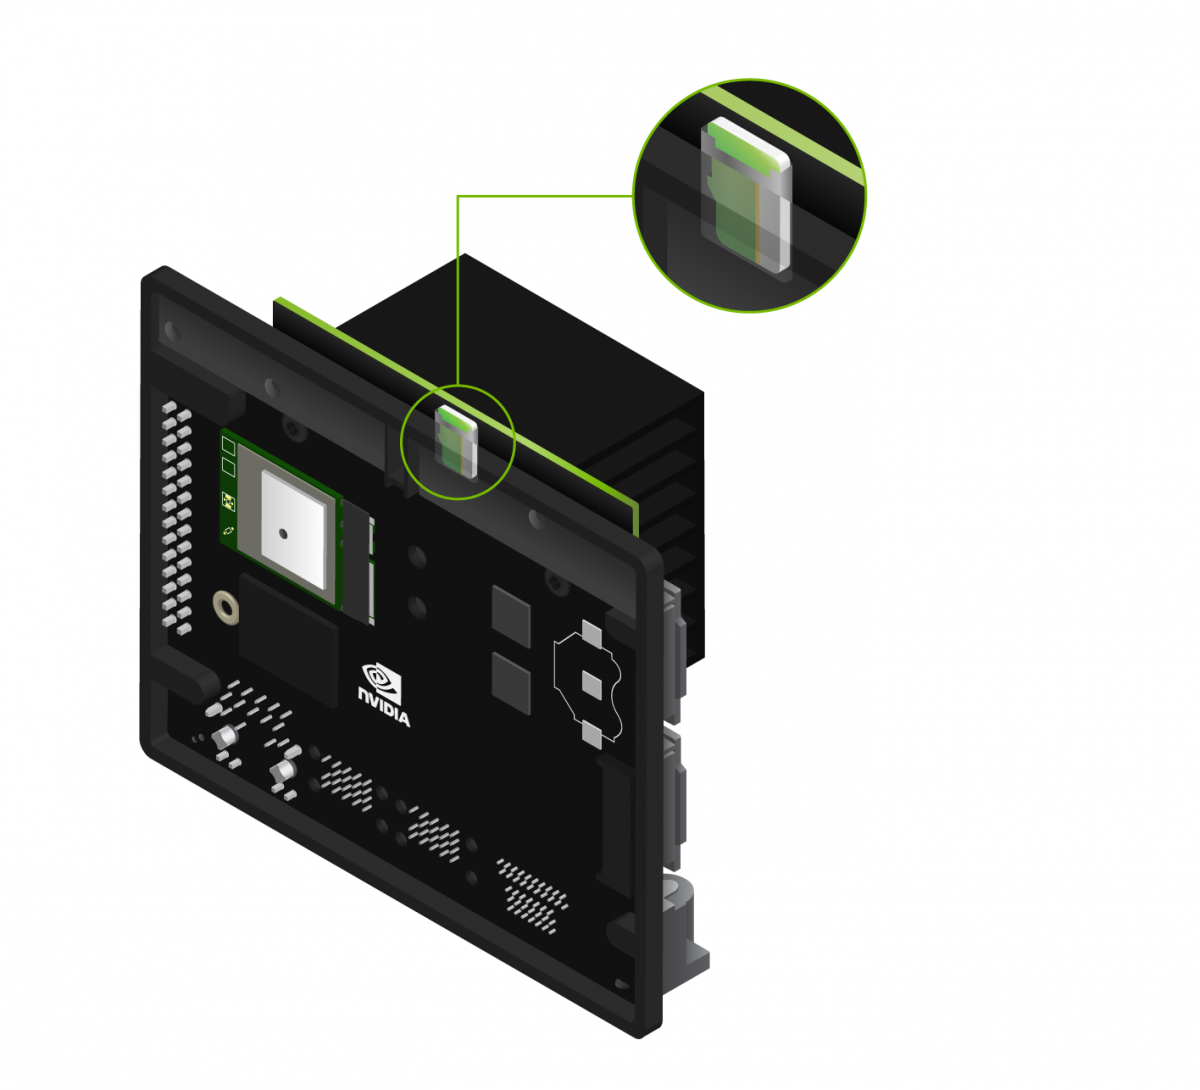  Insert microSD card into slot on underside of Jetson Xavier NX module